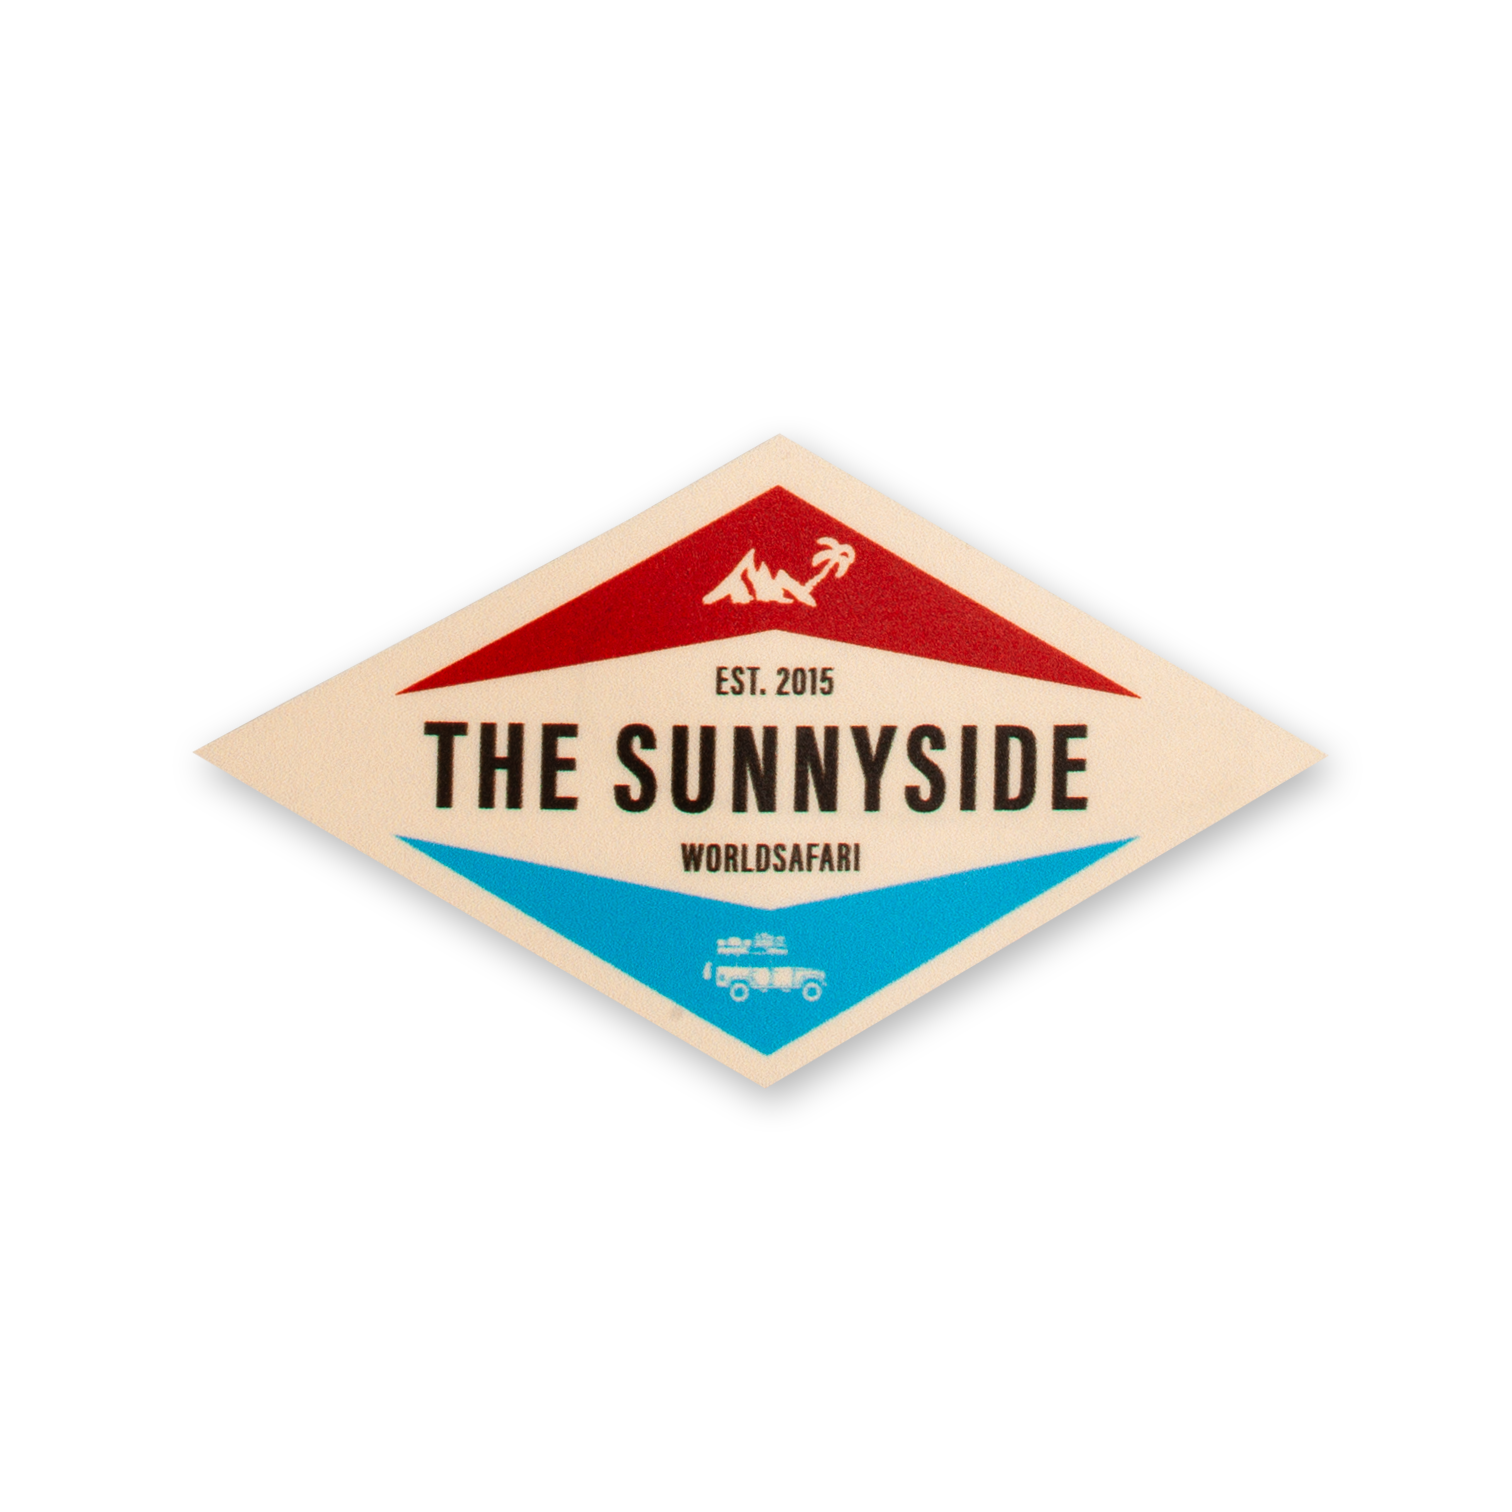 The Sunnyside als Karo Aufkleber - THE SUNNYSIDE